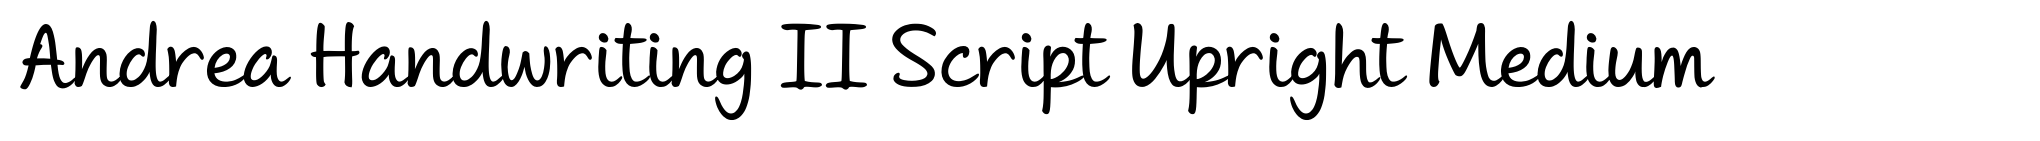 Andrea Handwriting II Script Upright Medium image